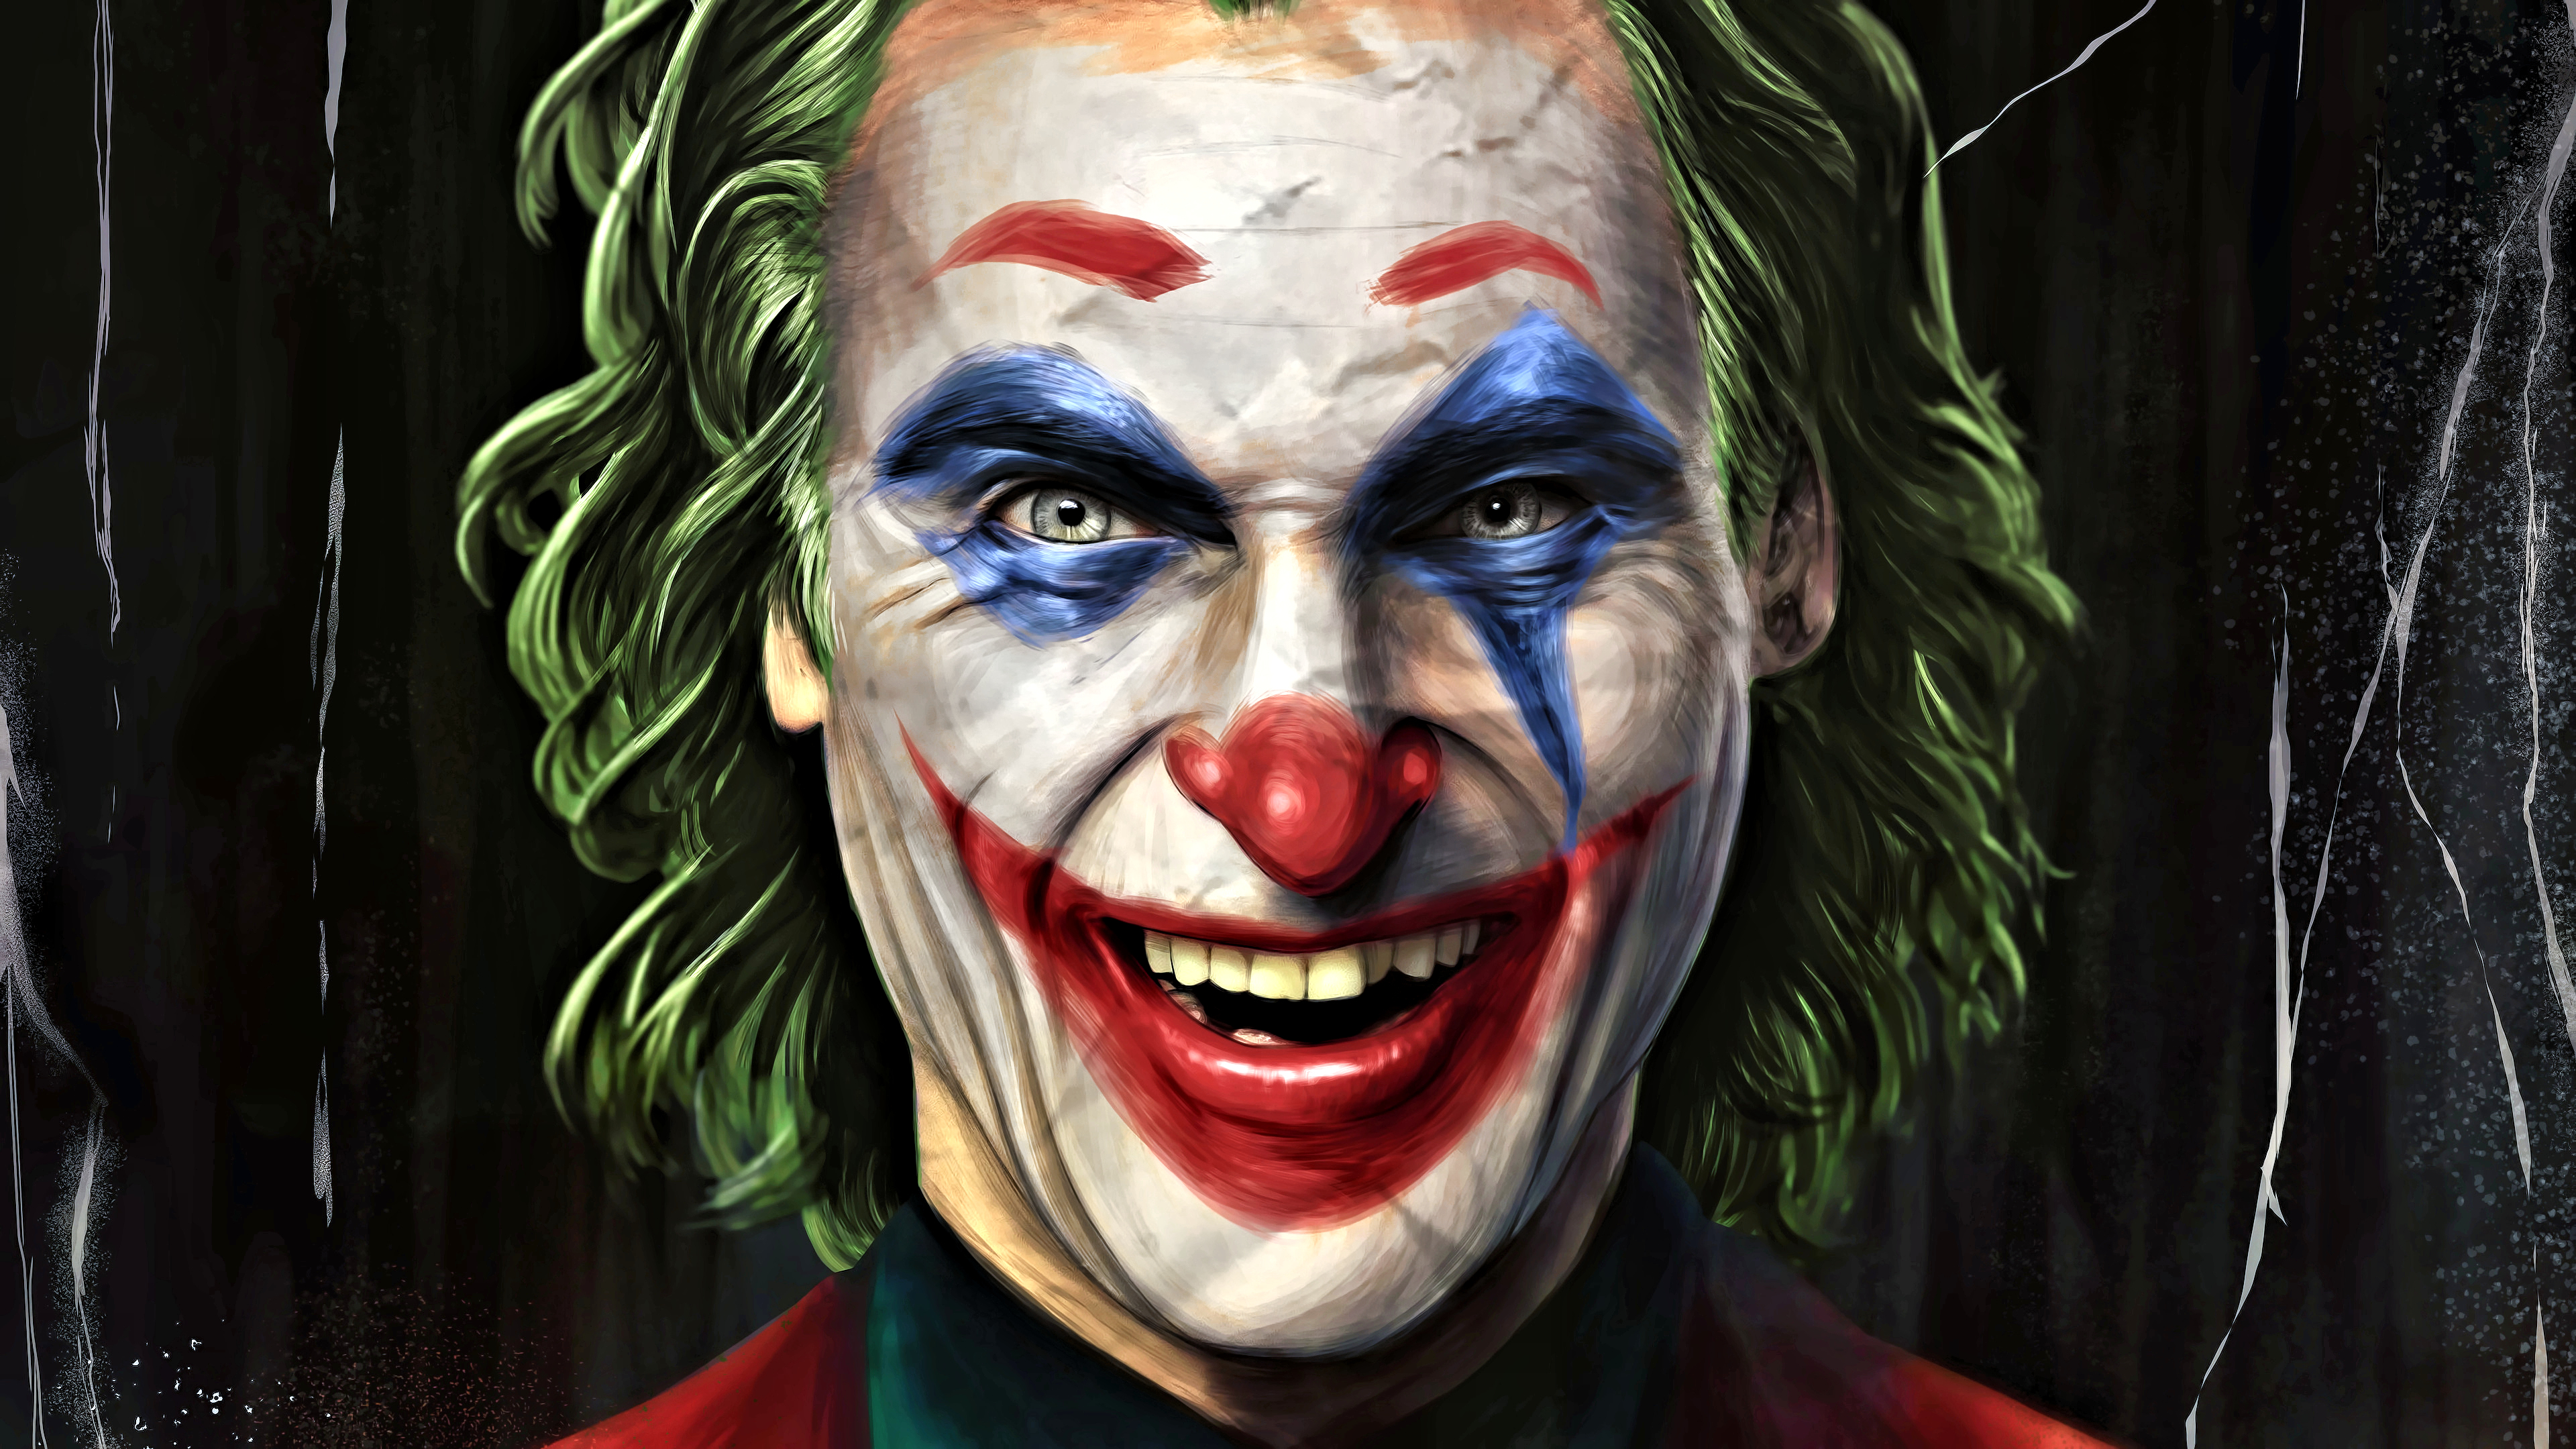 Joker 2019 Movie Gotham City Paint Brushes DC Comics Joker Batman DC Universe Clown Villain Super Vi 3840x2160